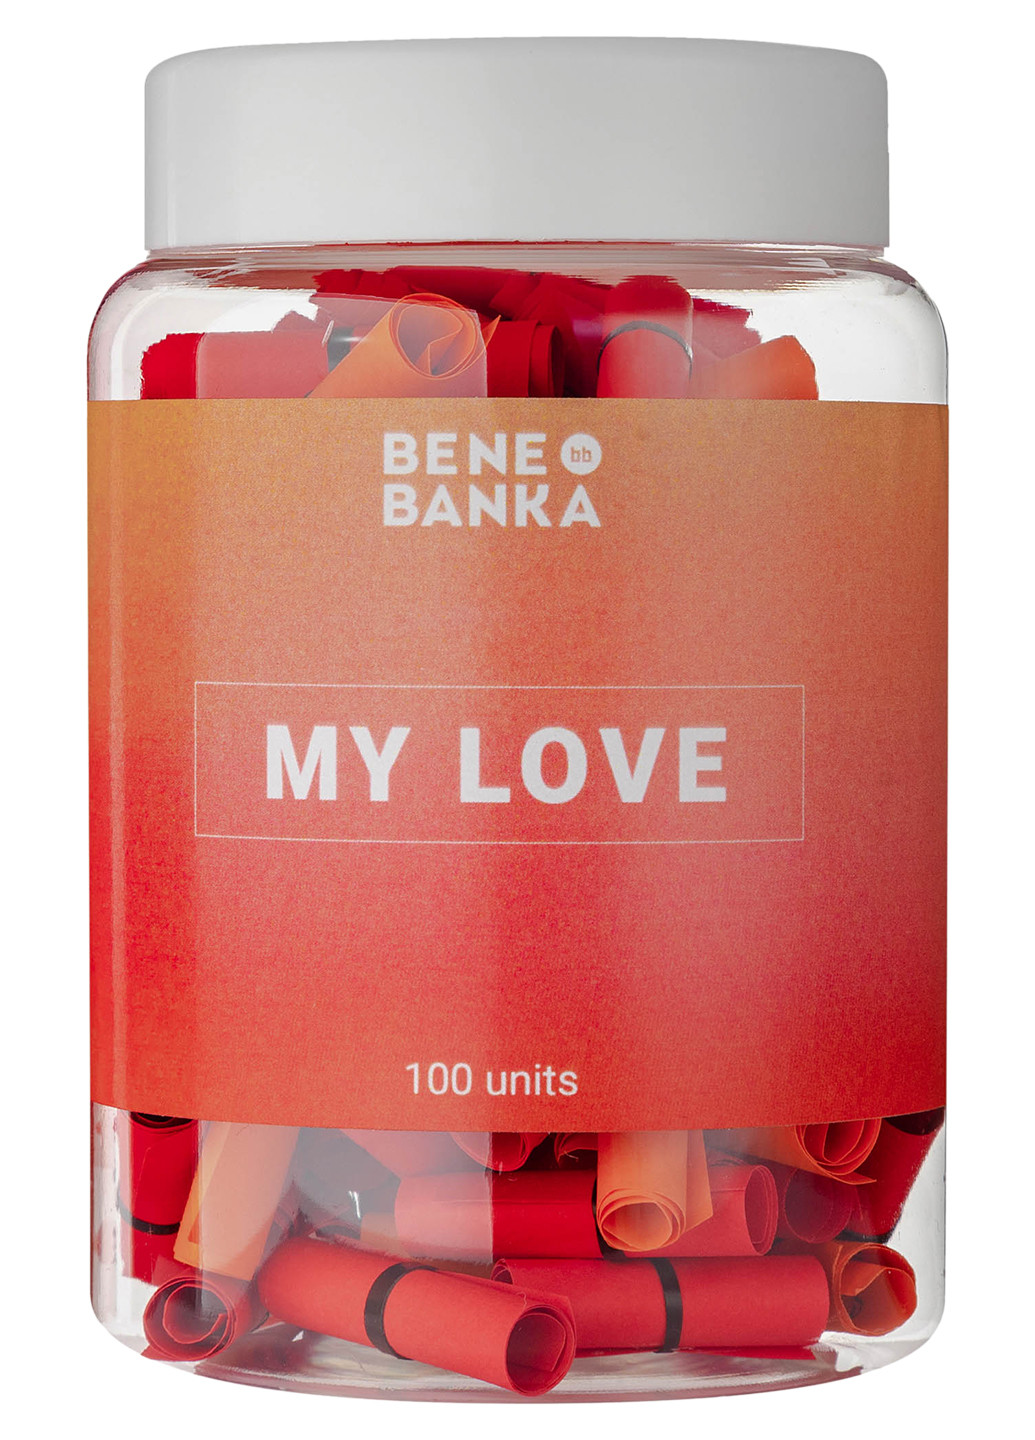 Баночка с записками "My Love" английский язык Bene Banka (200653609)